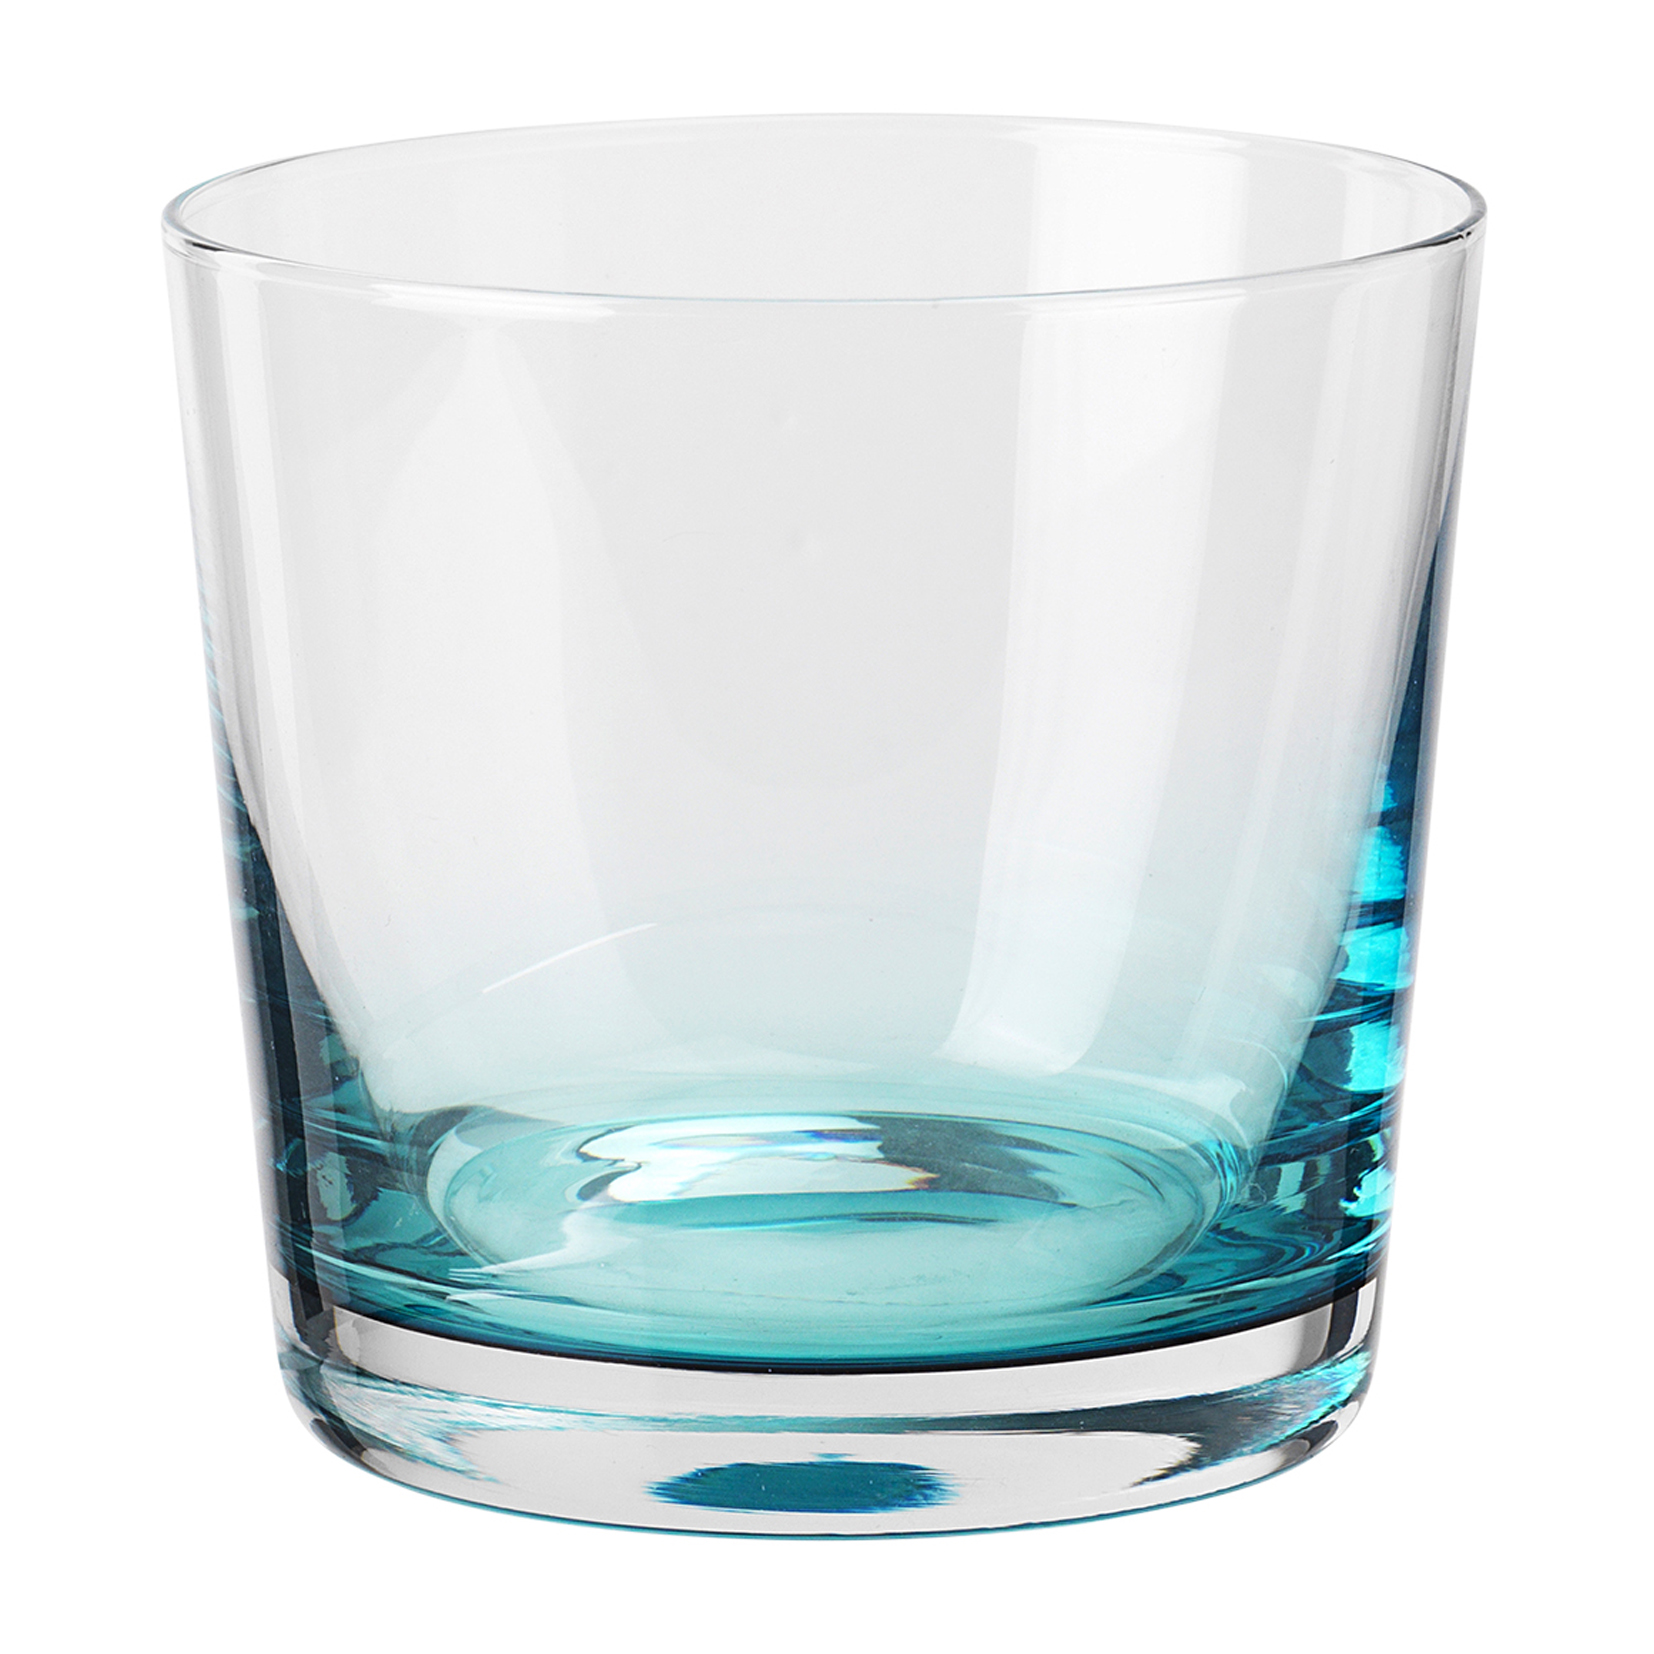 https://www.nordicnest.com/assets/blobs/broste-copenhagen-hue-drinking-glass-15-cl-clear-turquoise/572980-01_1_ProductImageMain-38573831c9.jpeg